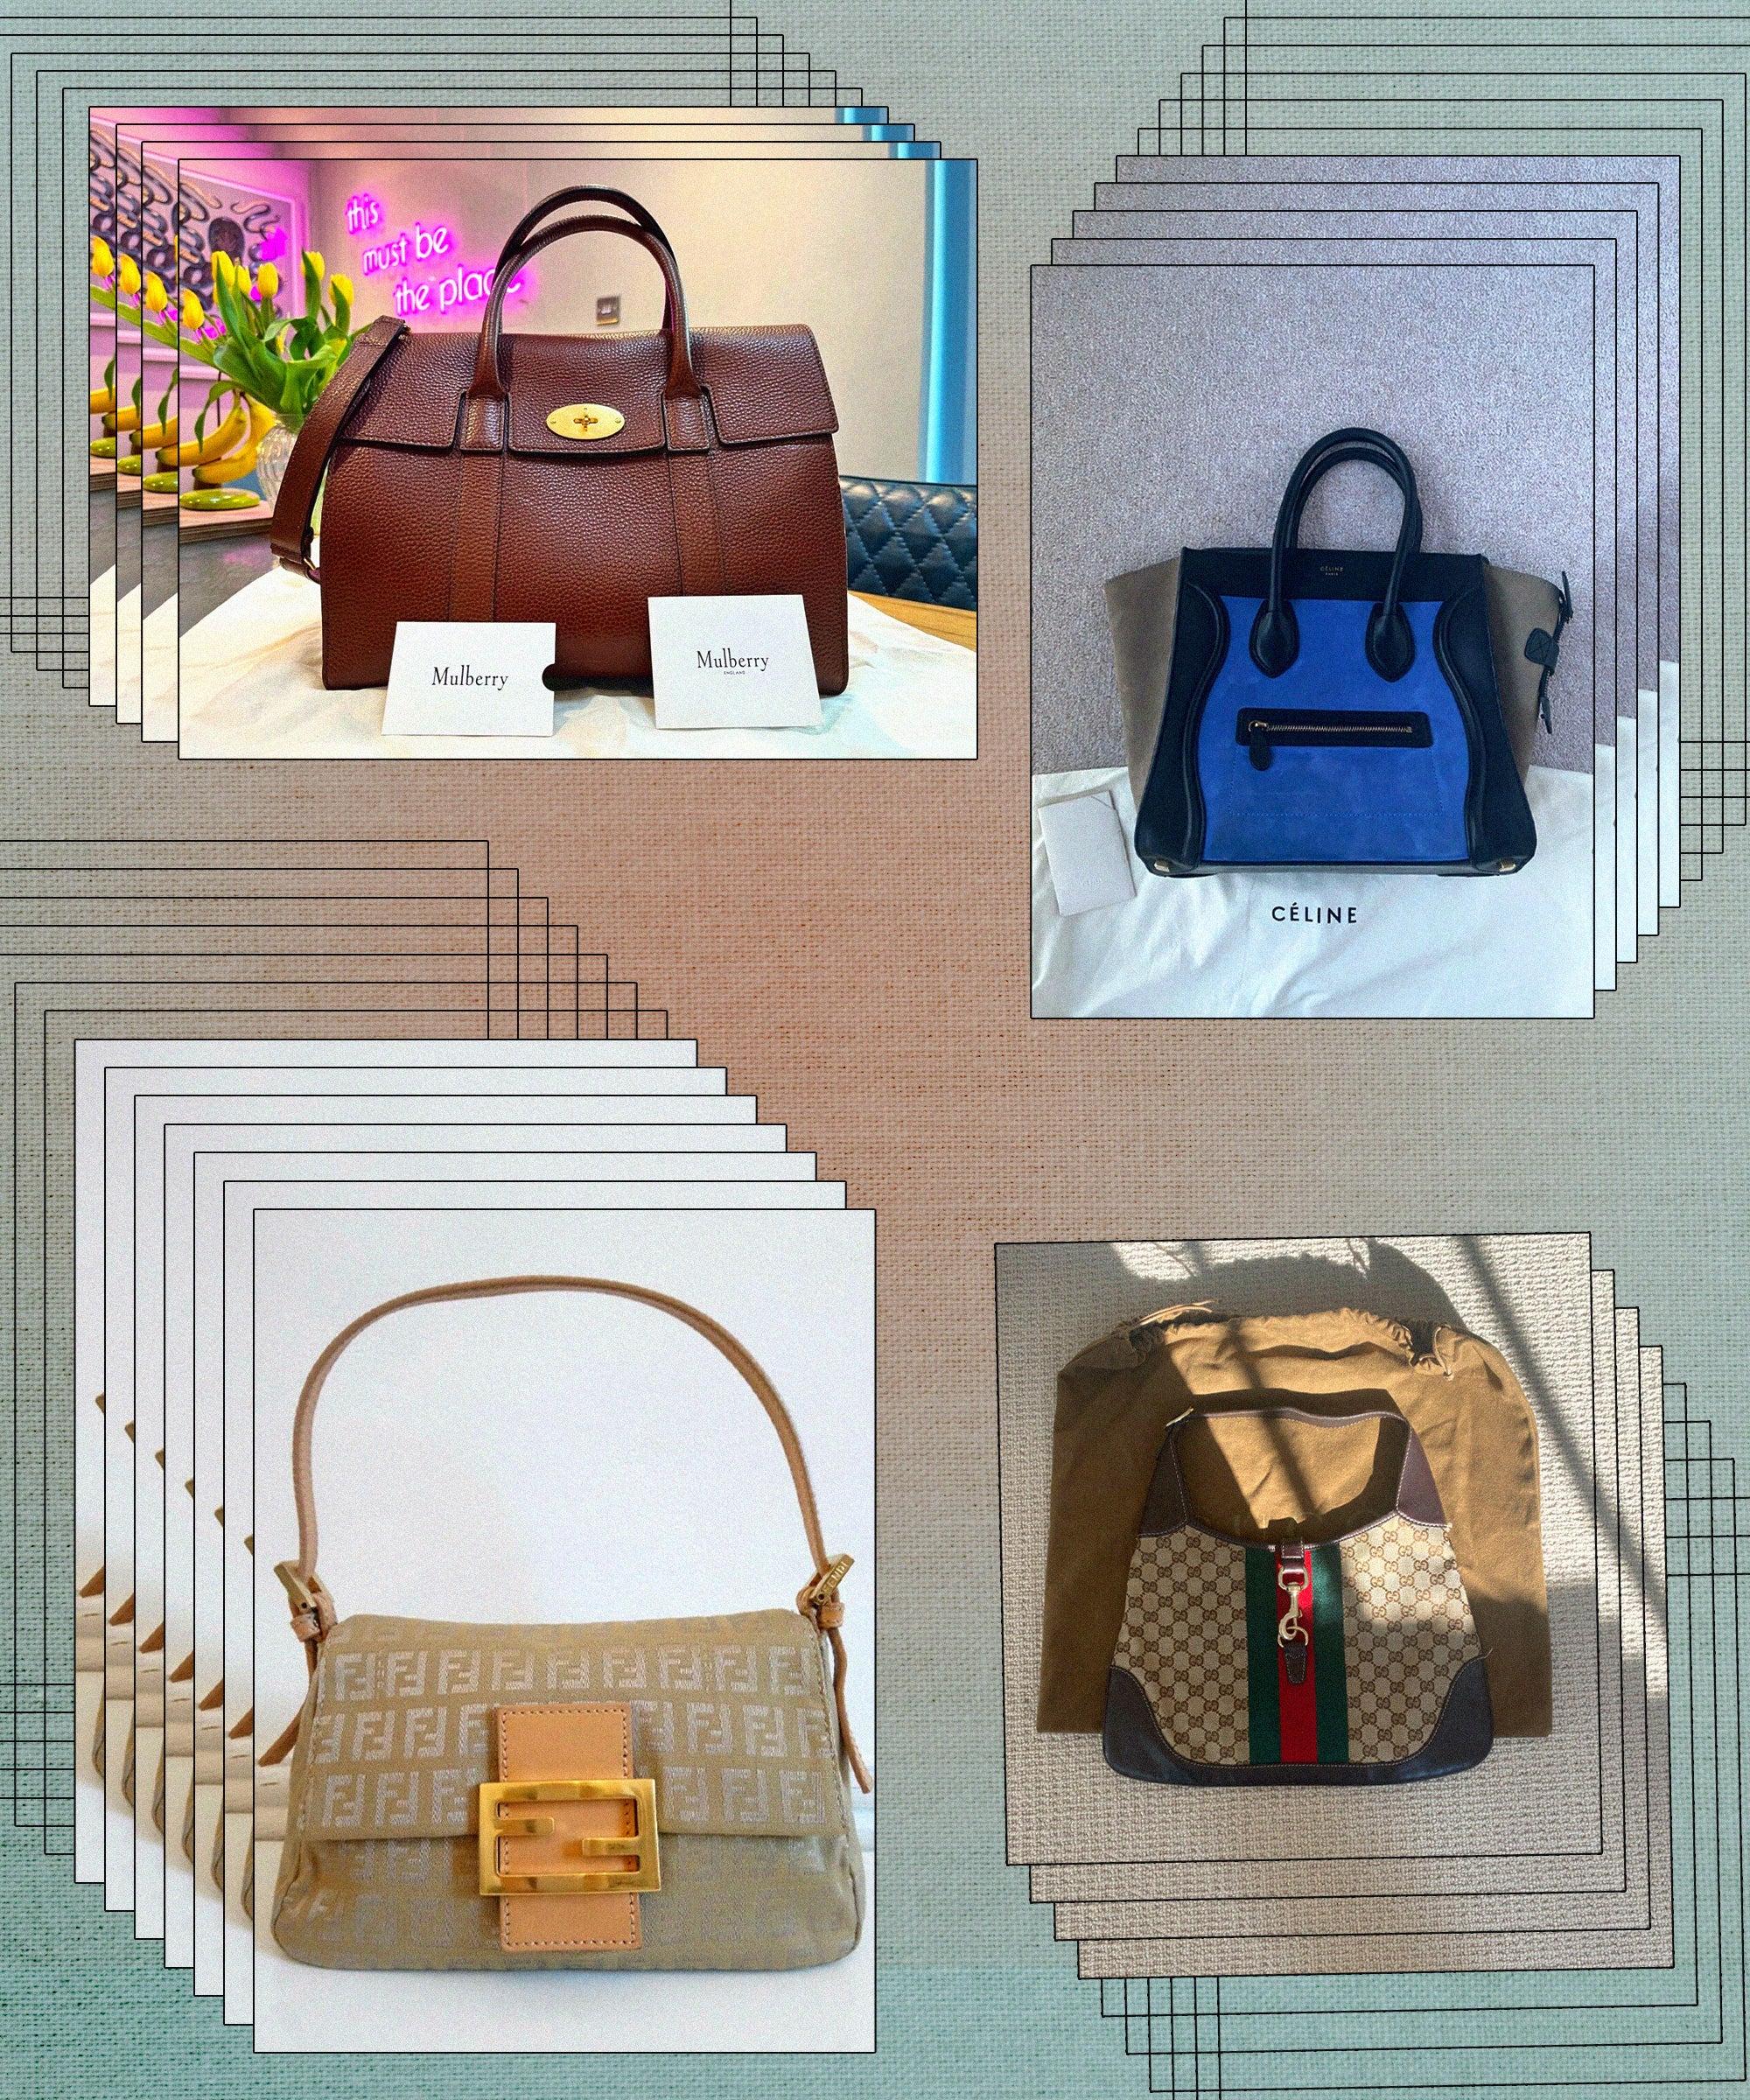 Authenticity Guarantee for Handbags